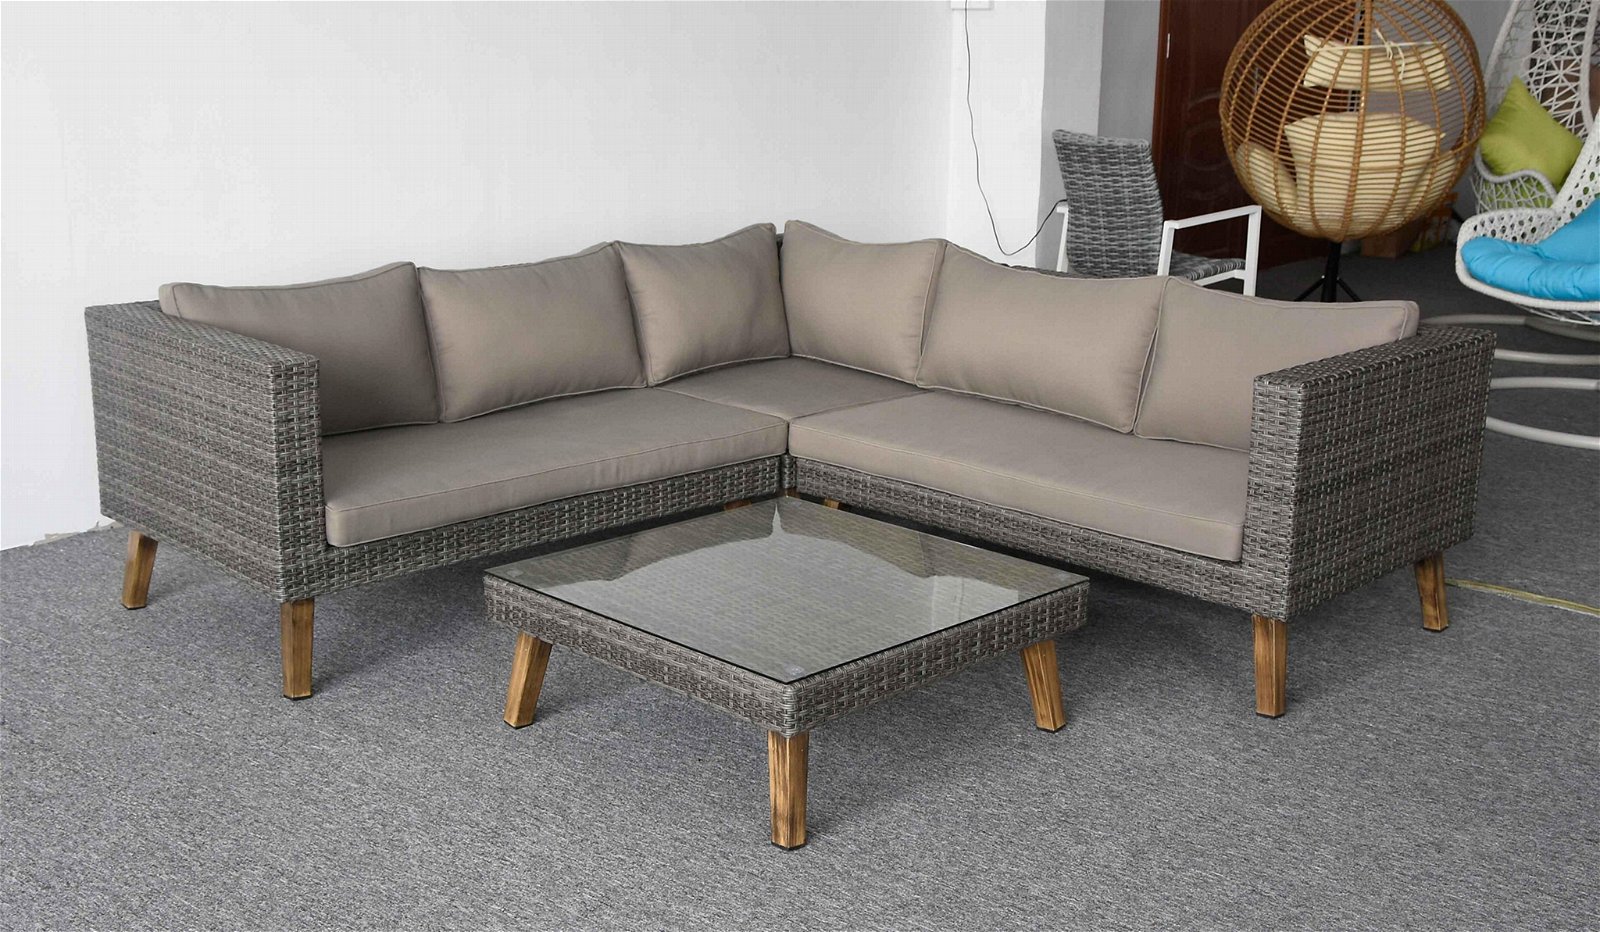 Hormel outdoor furniture wicker L shaped sectional rattan garden sofa set 2